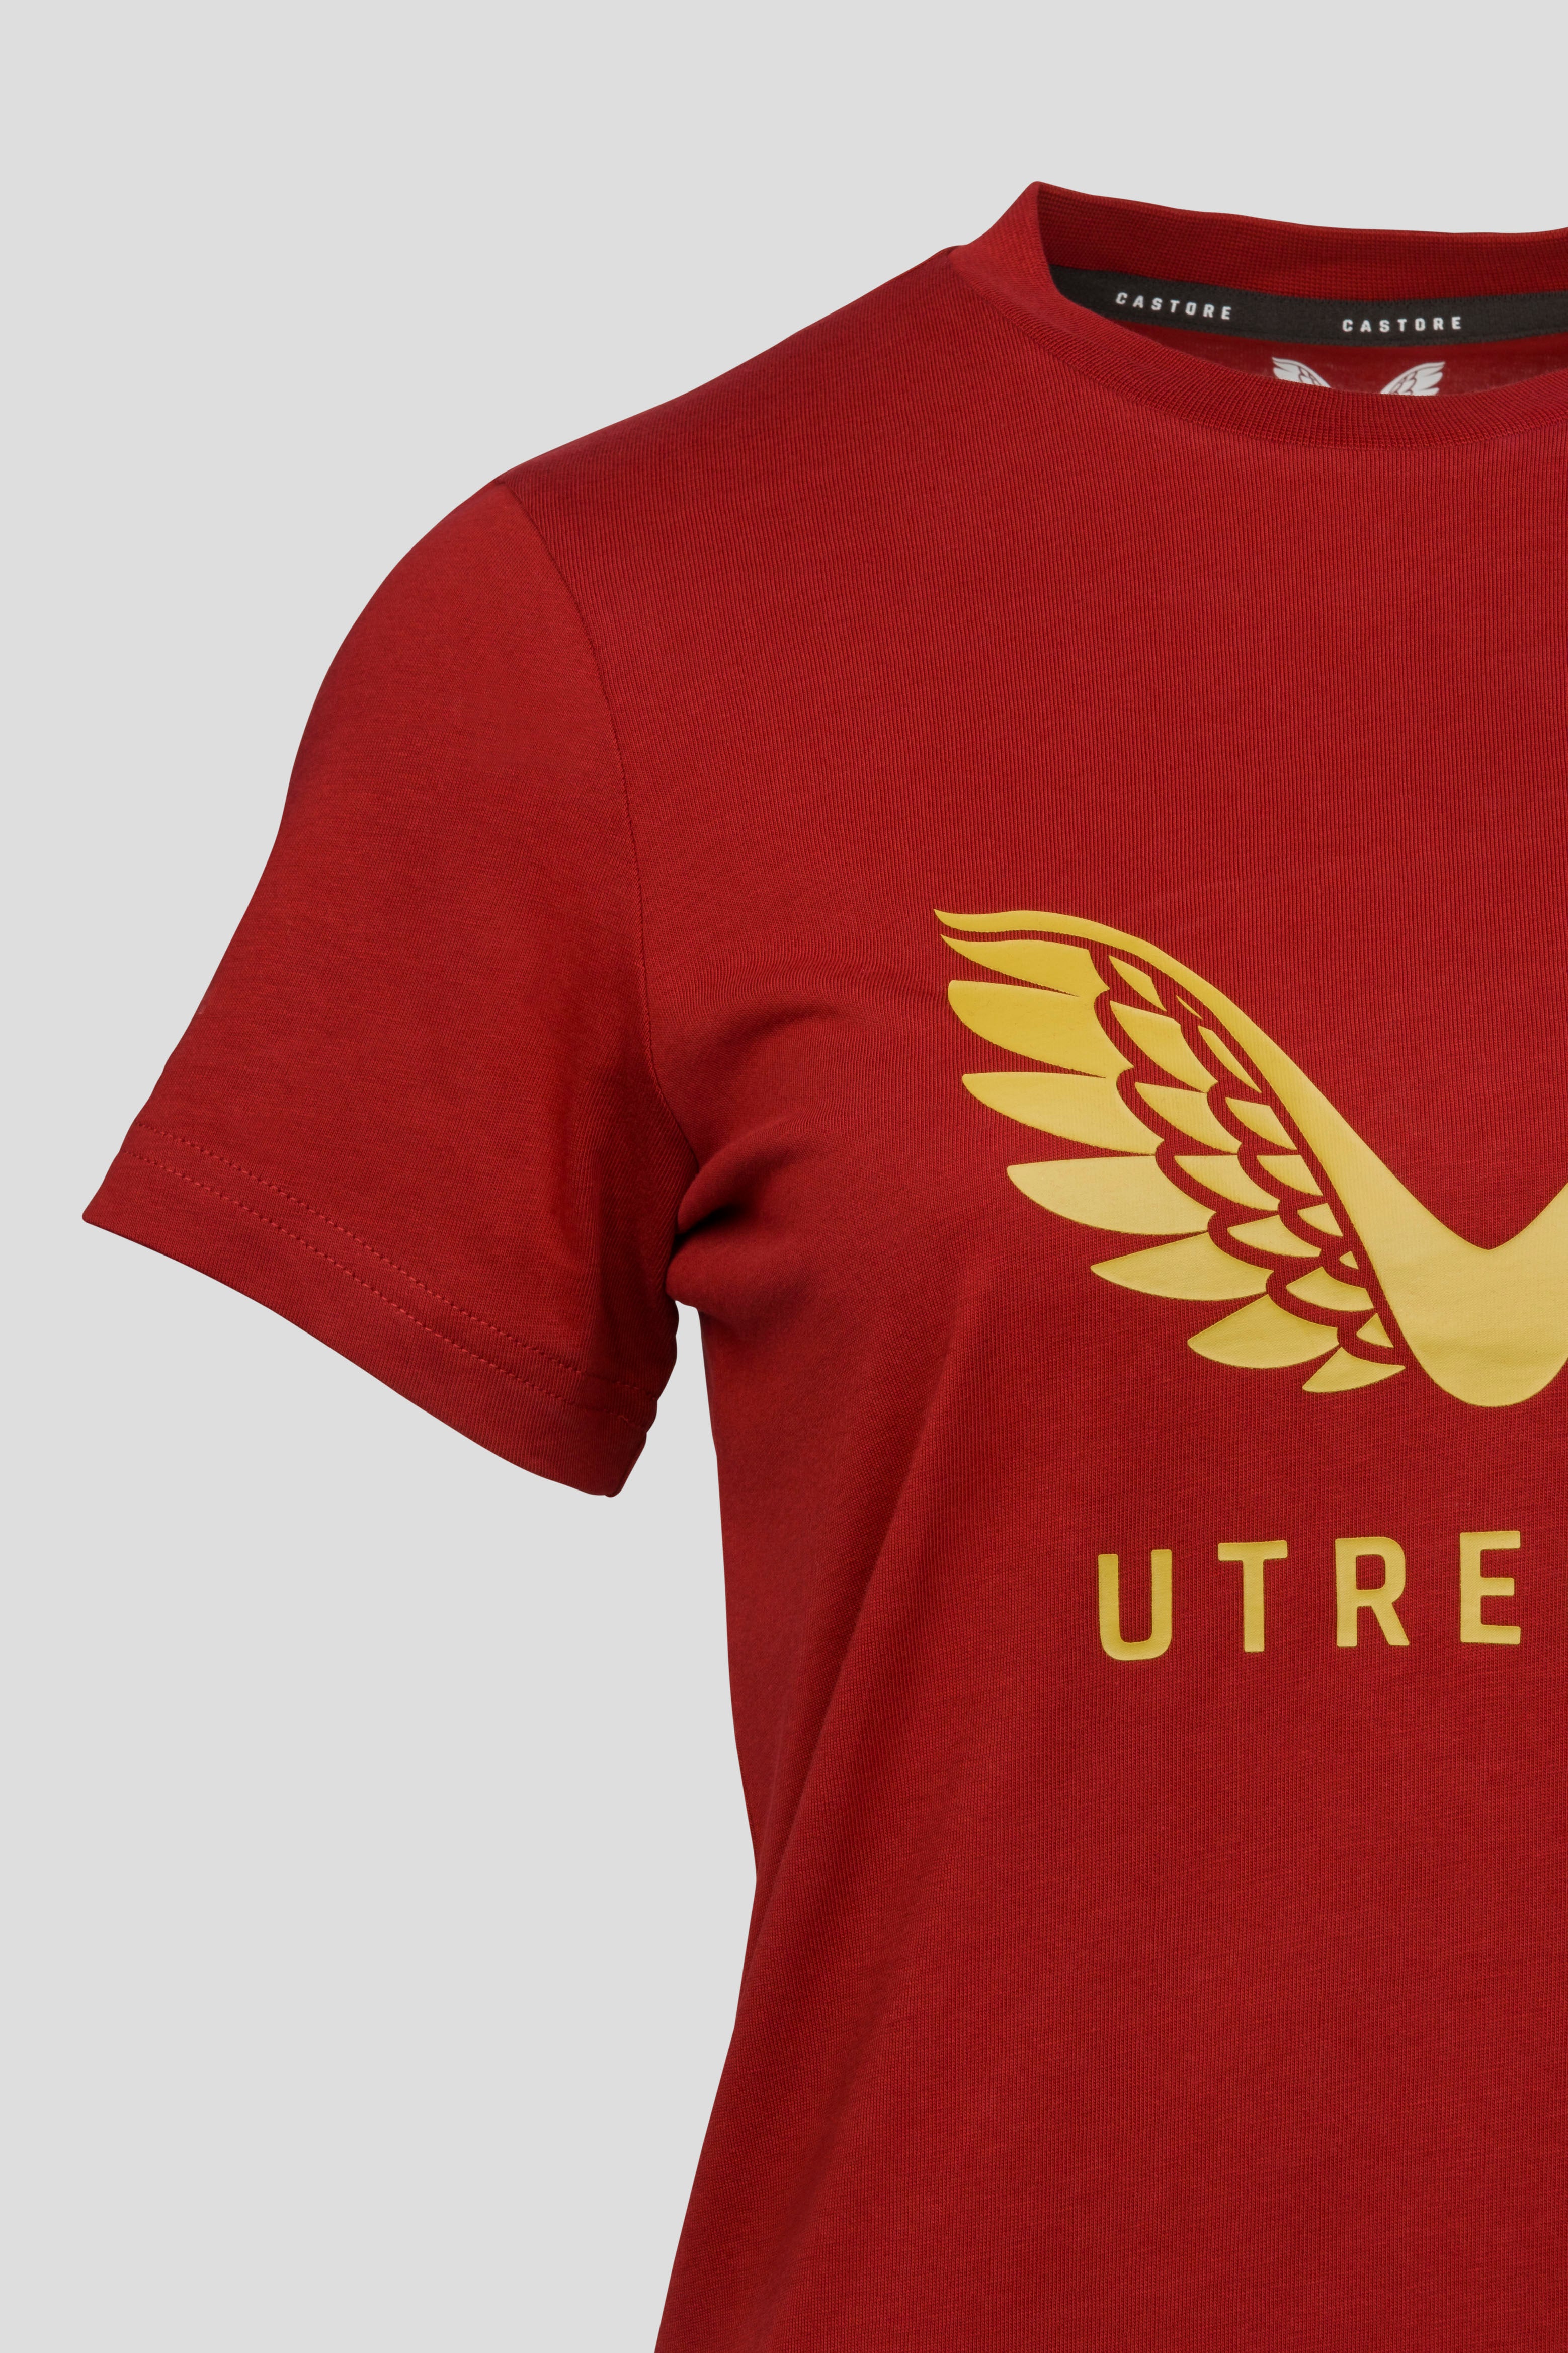 FC Utrecht Spelers Travel Logo T-shirt - Vrouwen